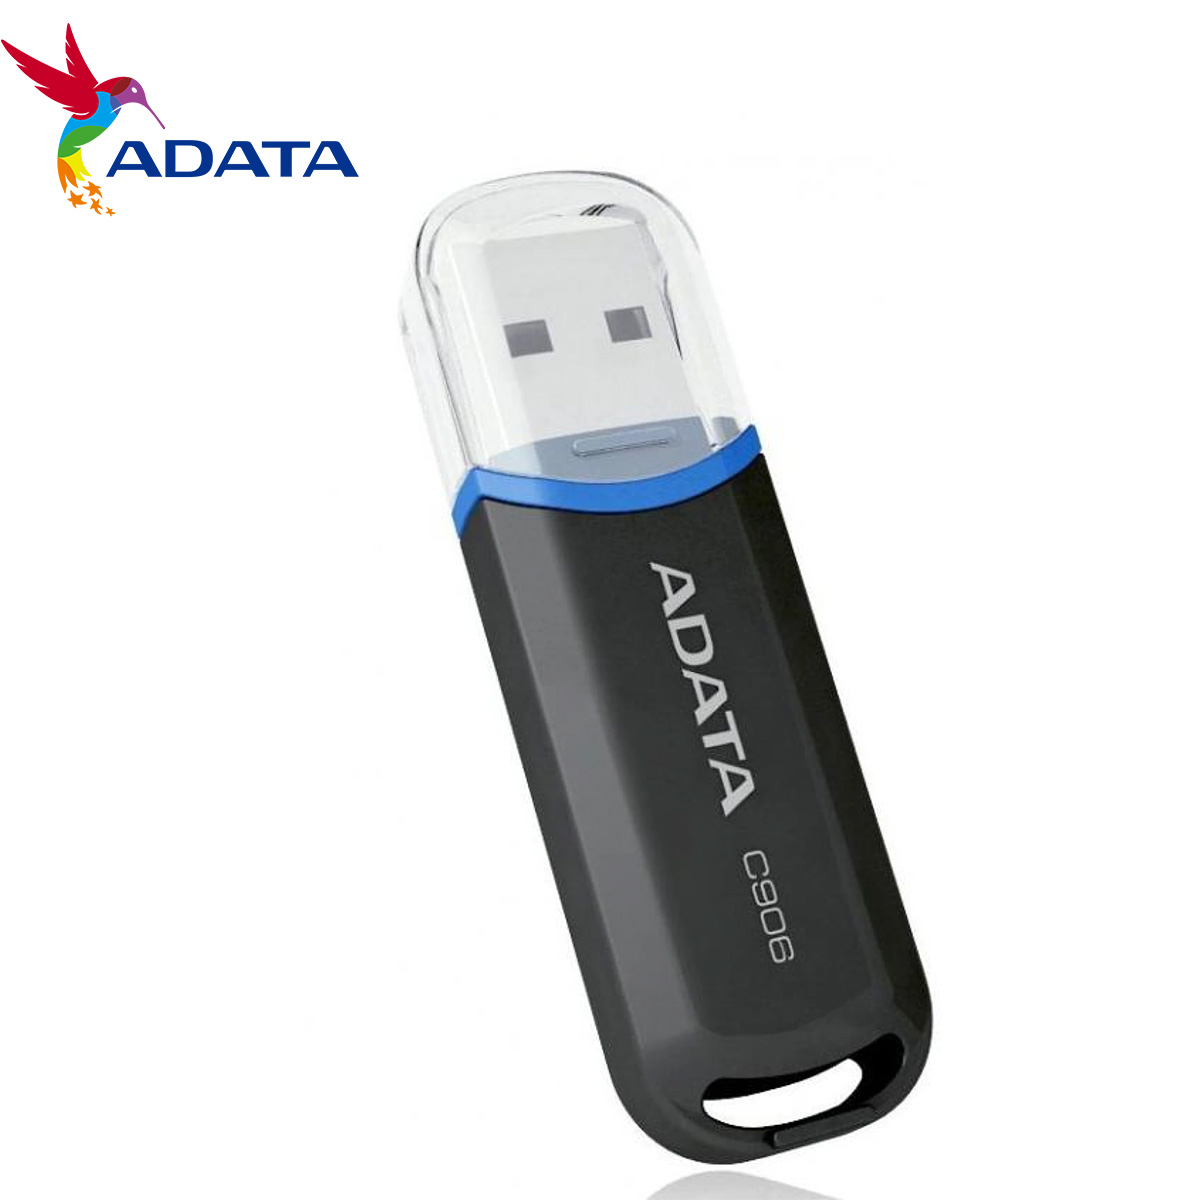 ADATA C906 32GB USB 2.0 Compact Design Flash Drive, Black